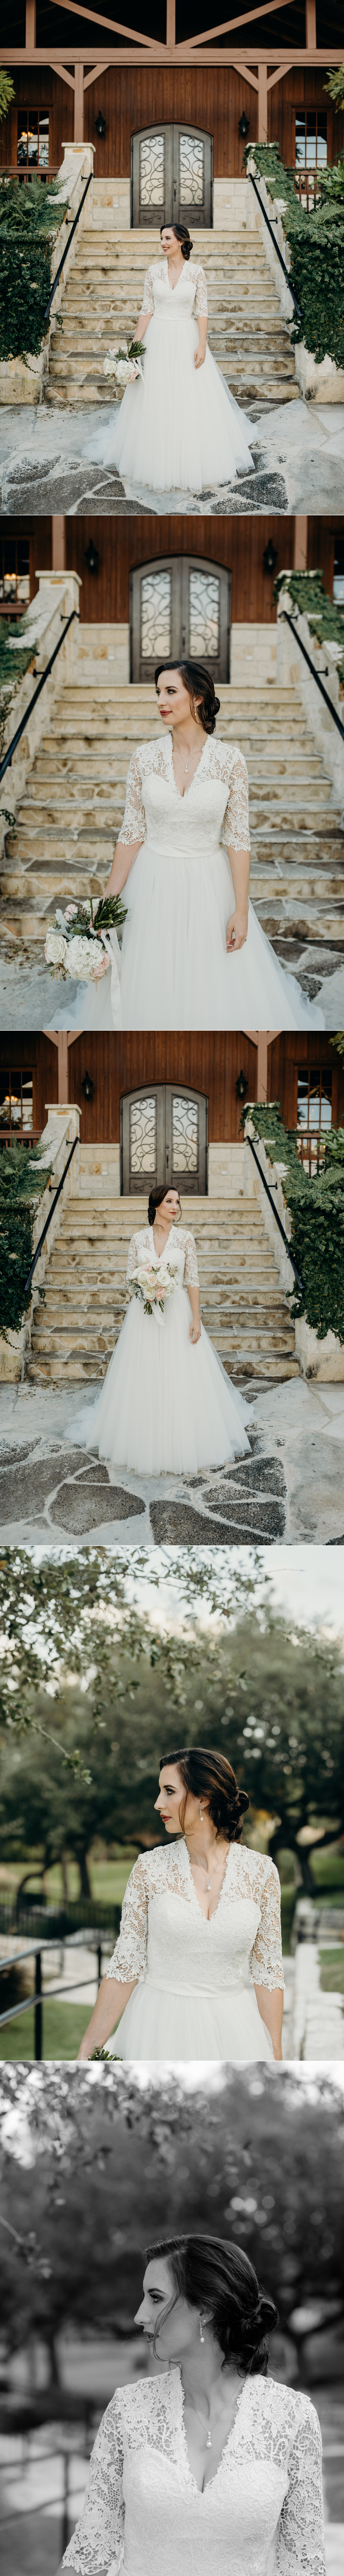 austin-minneapolis-wedding-engagement-elopement-bridals-prices-best-senior-photographer-destination-elopement-milestone-texas-dallas-houston-lexi_0021.jpg